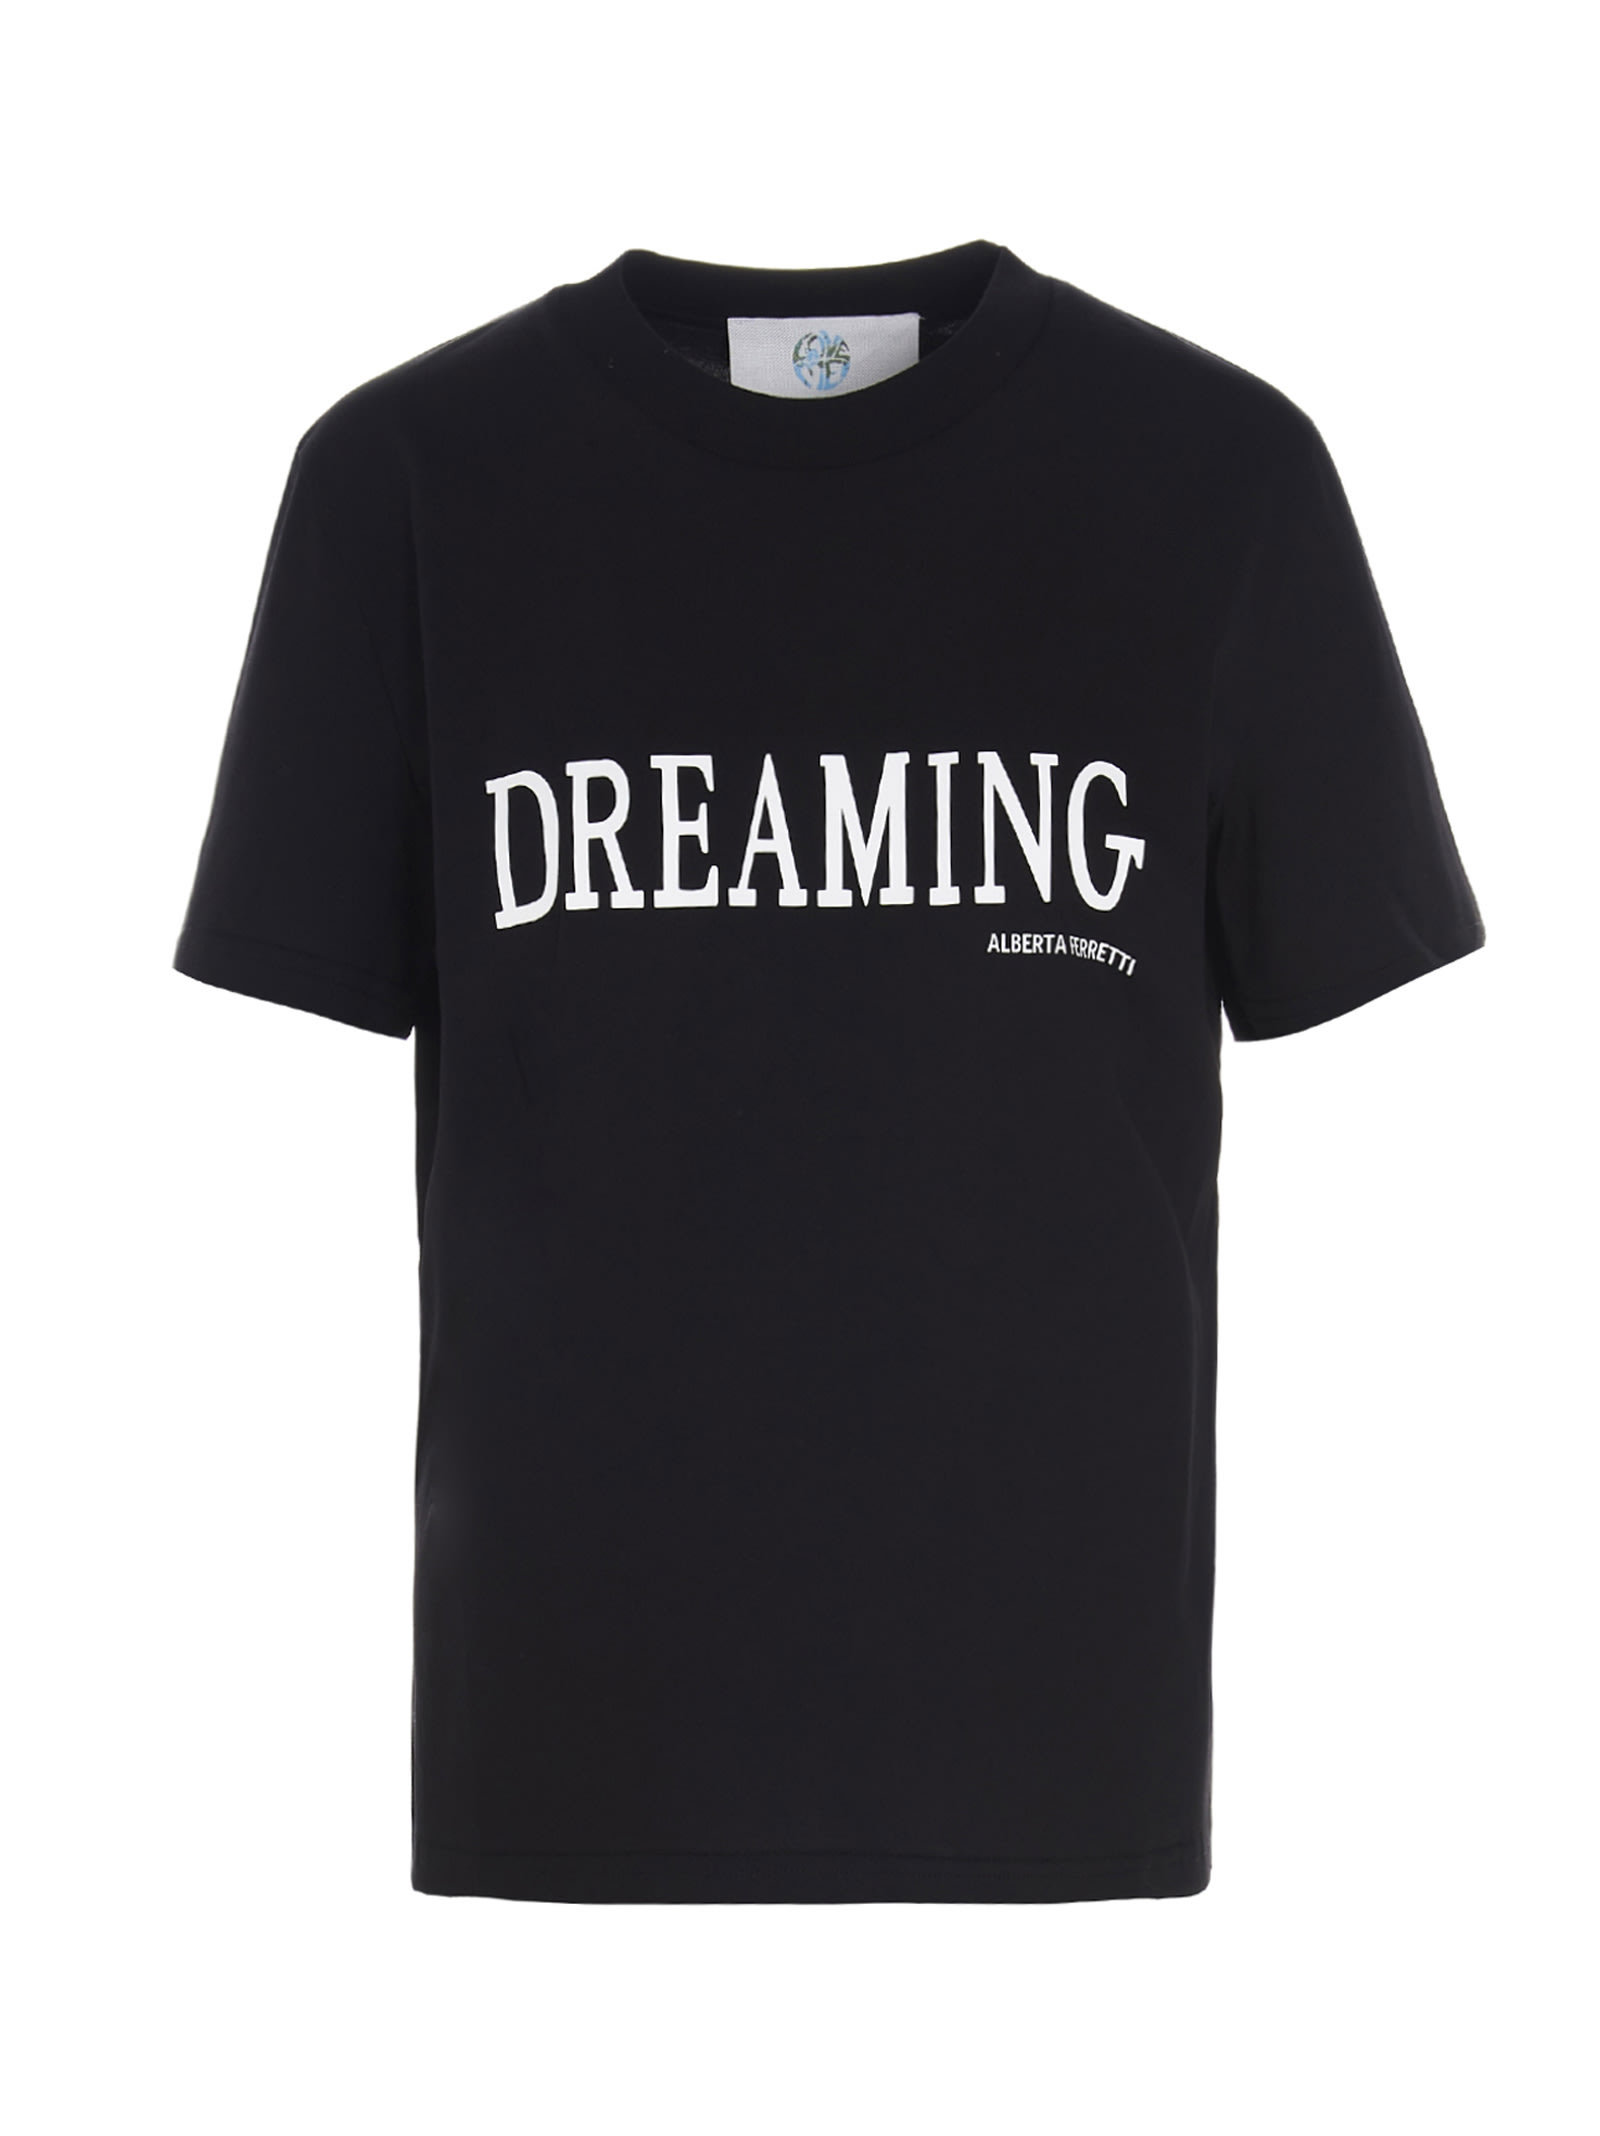 Alberta Ferretti capsule. Dreaming T-shirt